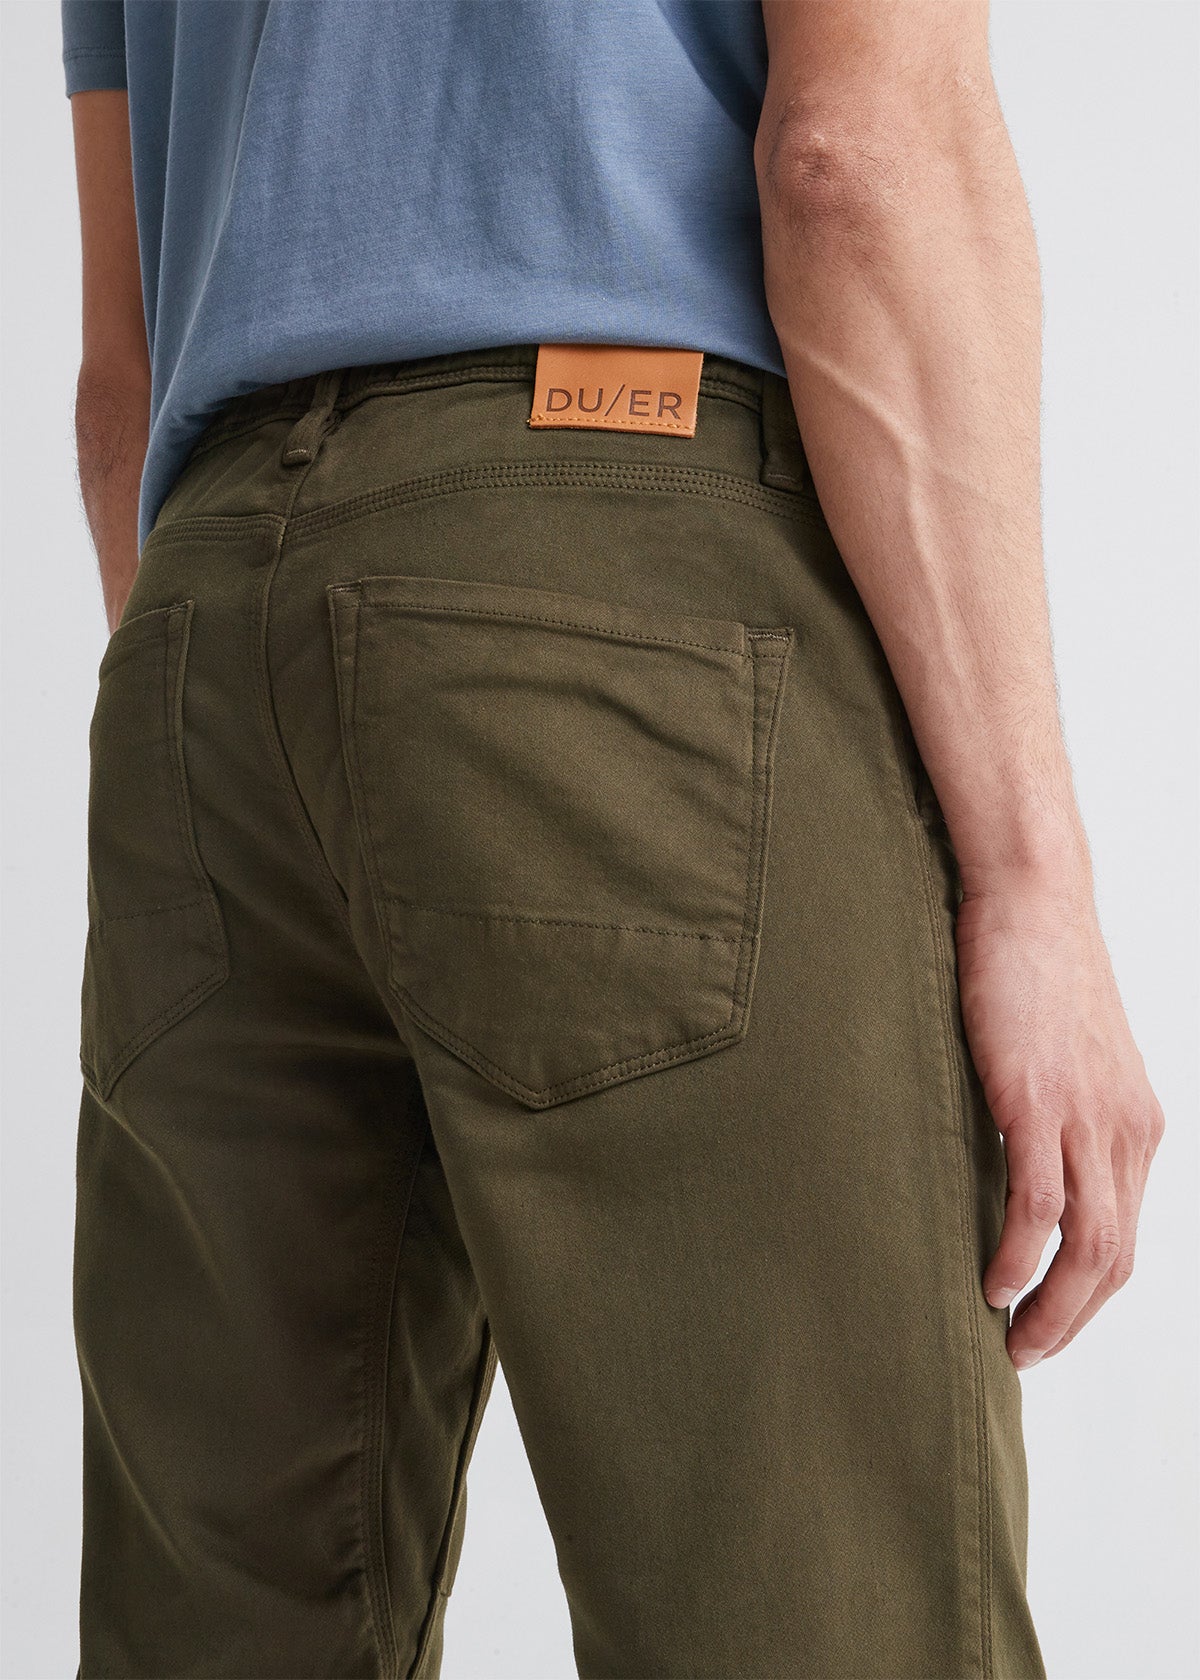 Plain High Waisted Jogger Pants - Army Green S